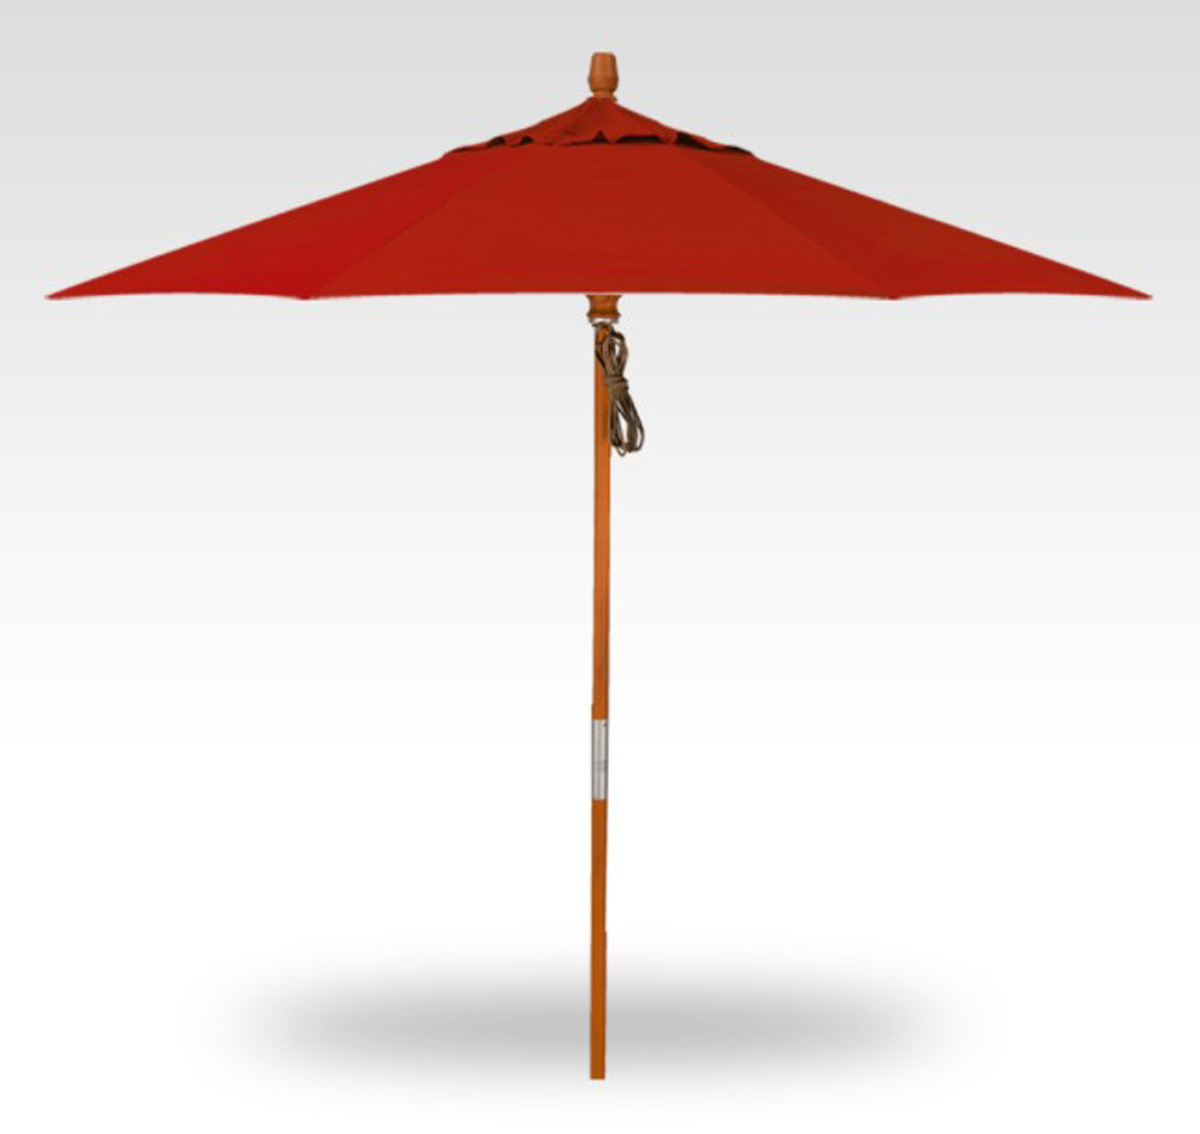 9′ jockey red wood no-tilt umbrella – hardwood frame product image